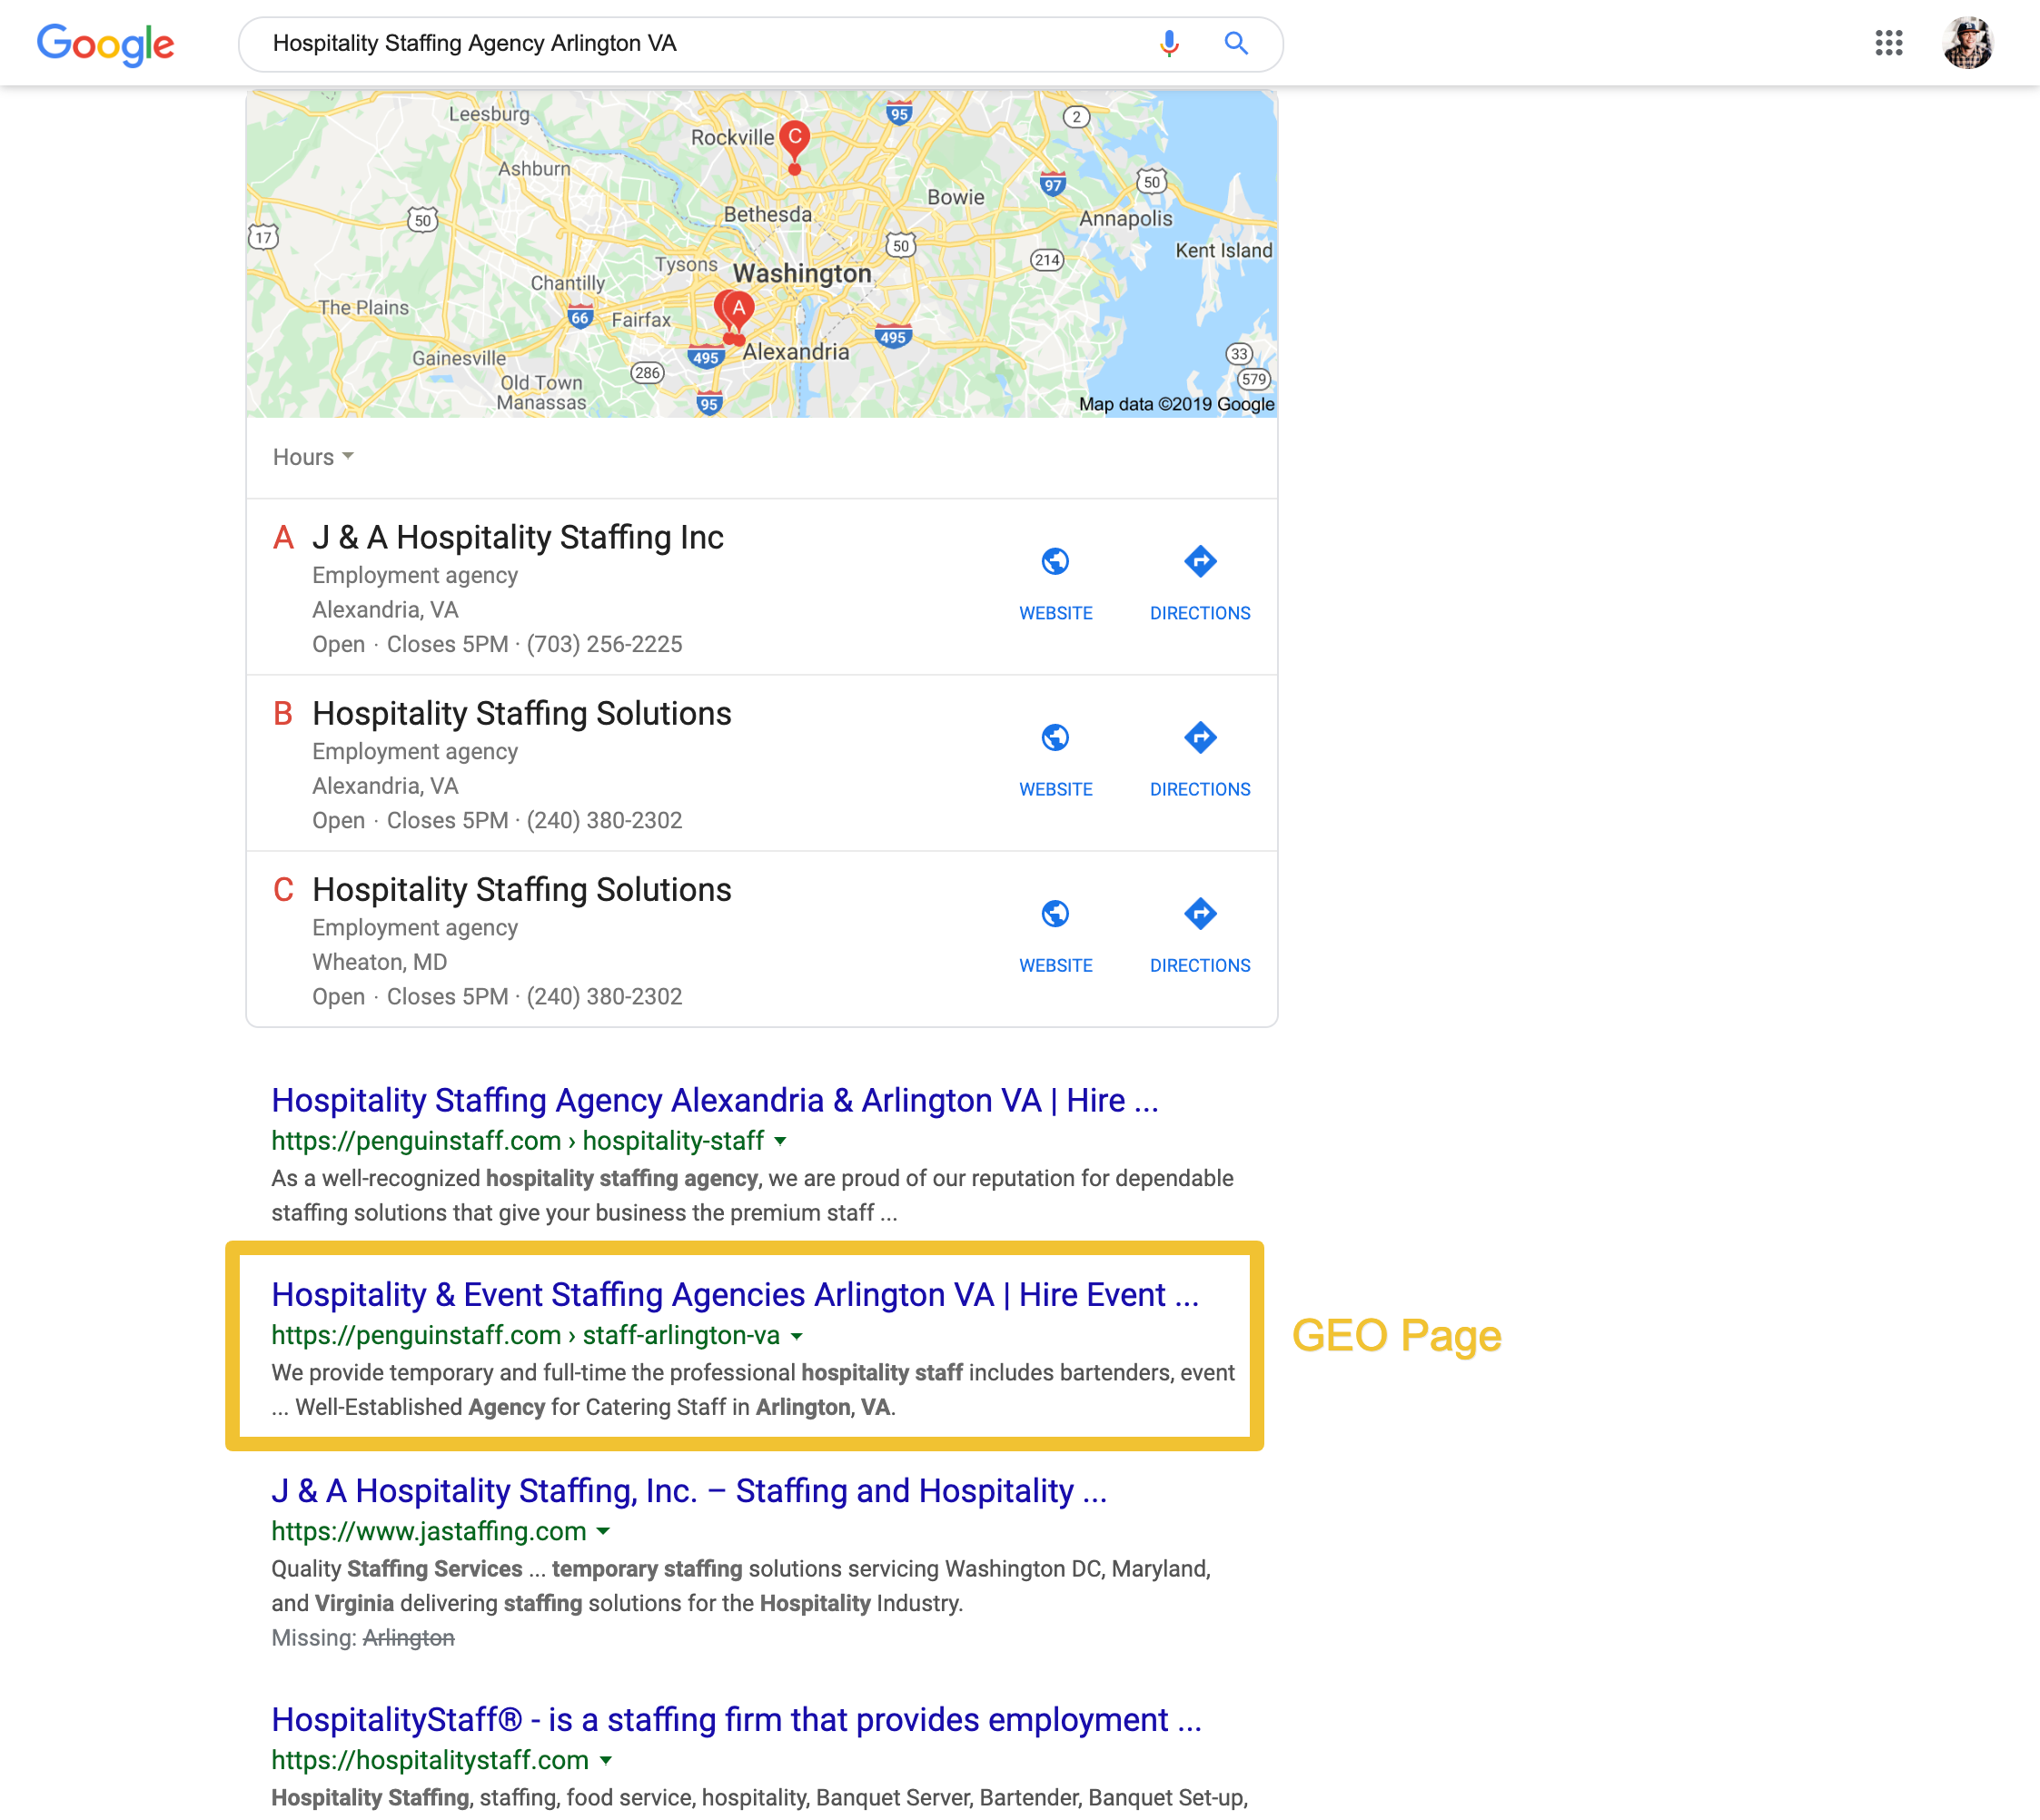 Hospitality Staffing Agency Arlington VA - Google Search